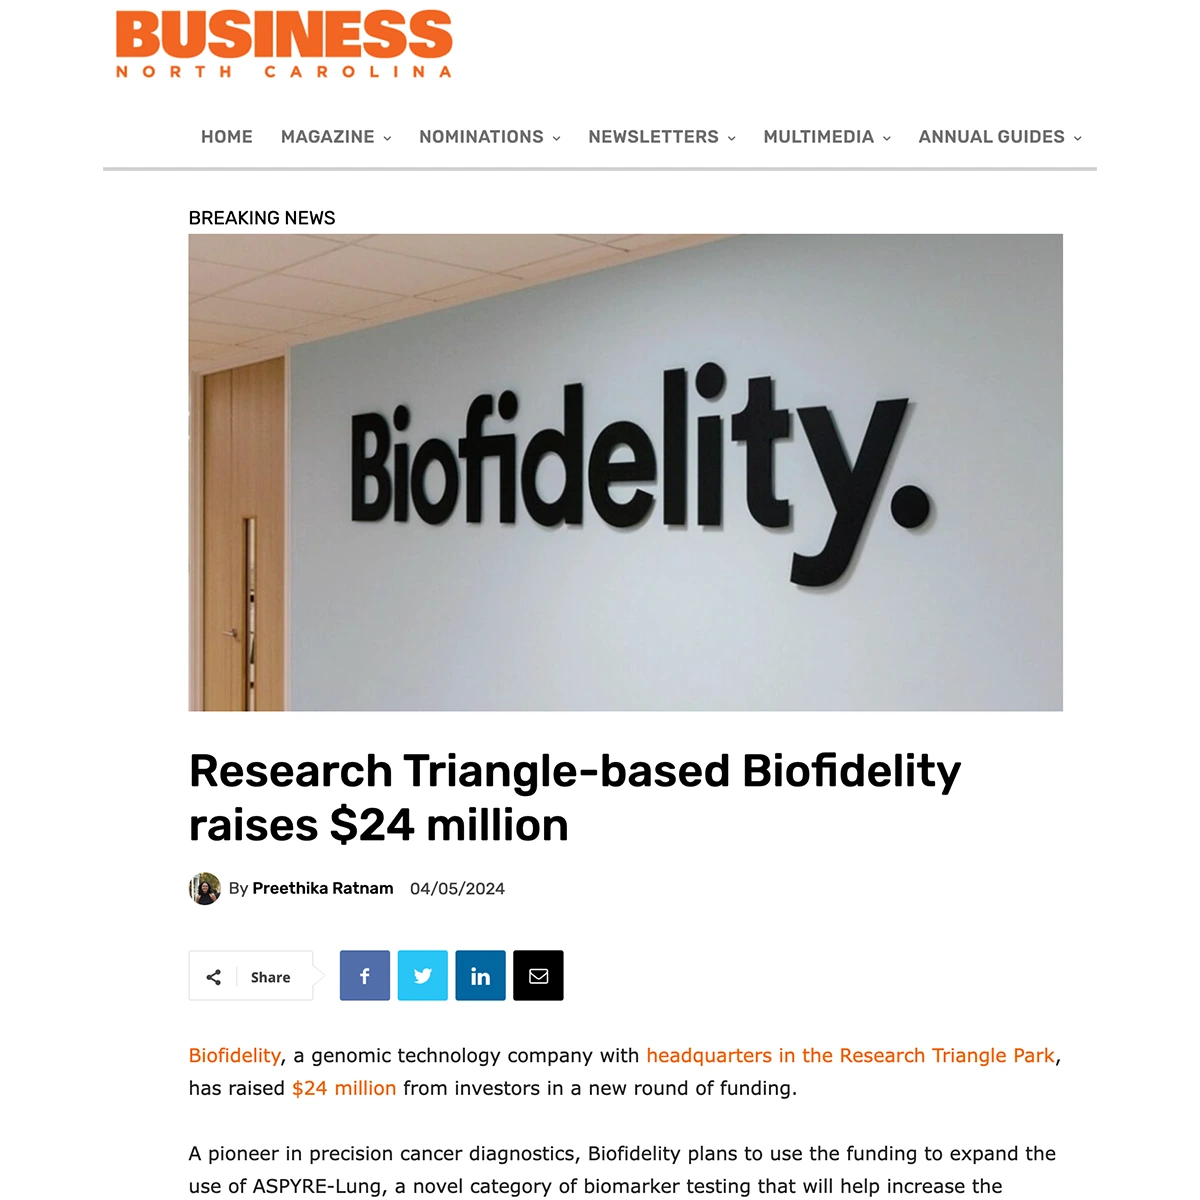 Research Triangle-based Biofidelity raises $24 million